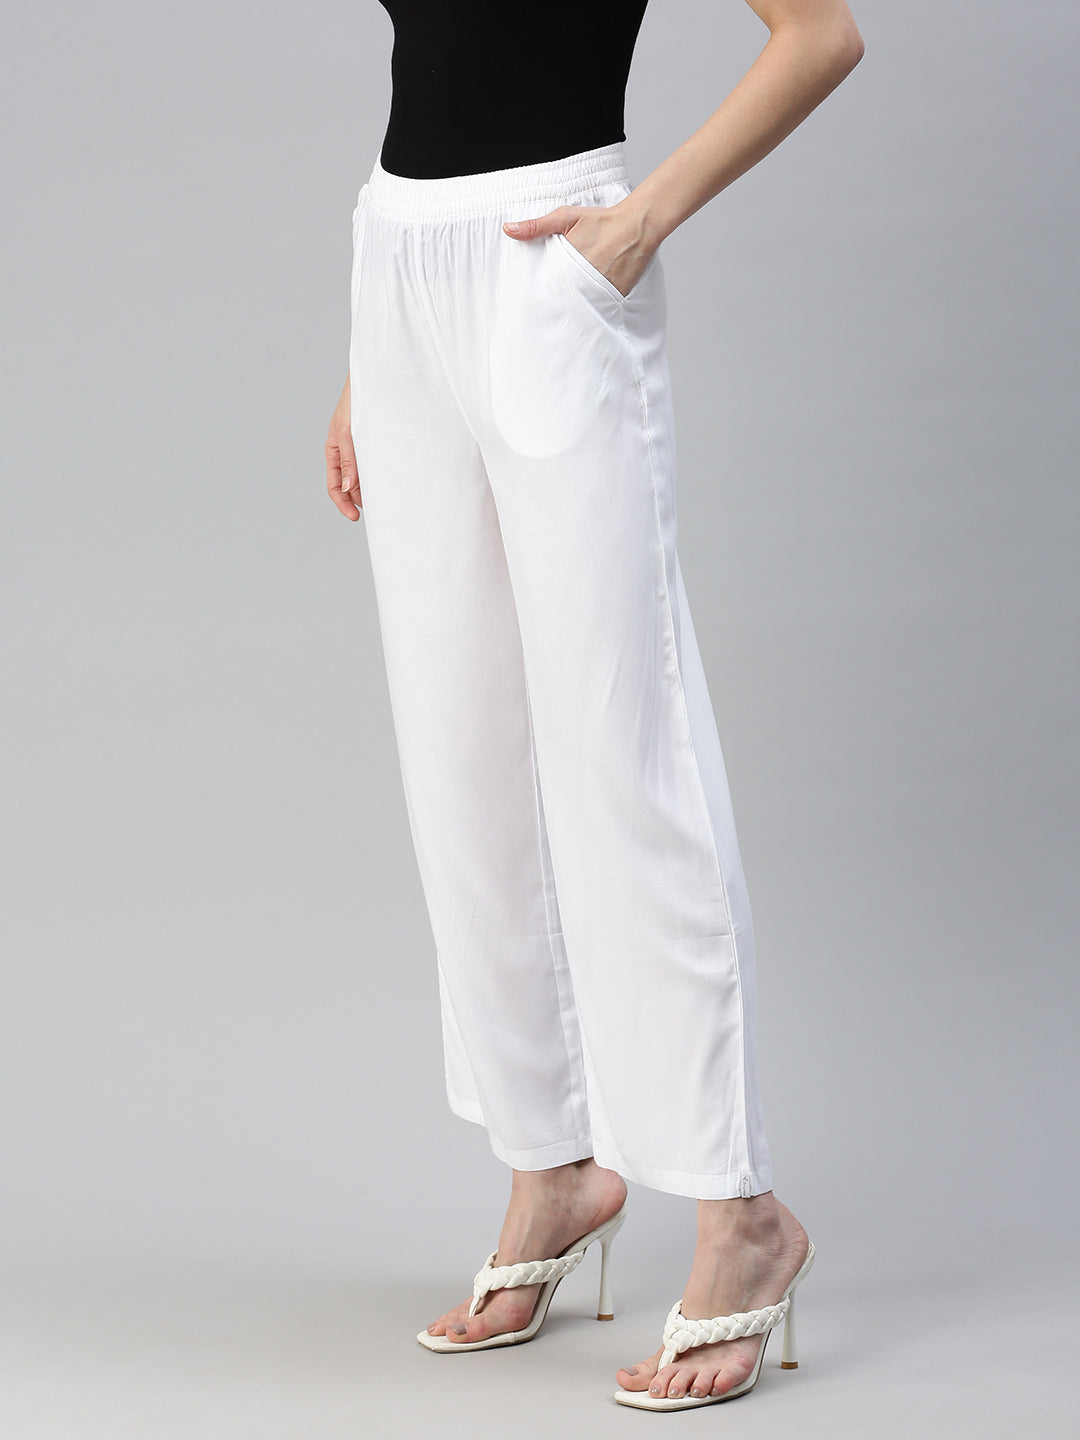 Buy White Trousers  Pants for Women by Jabama Online  Ajiocom